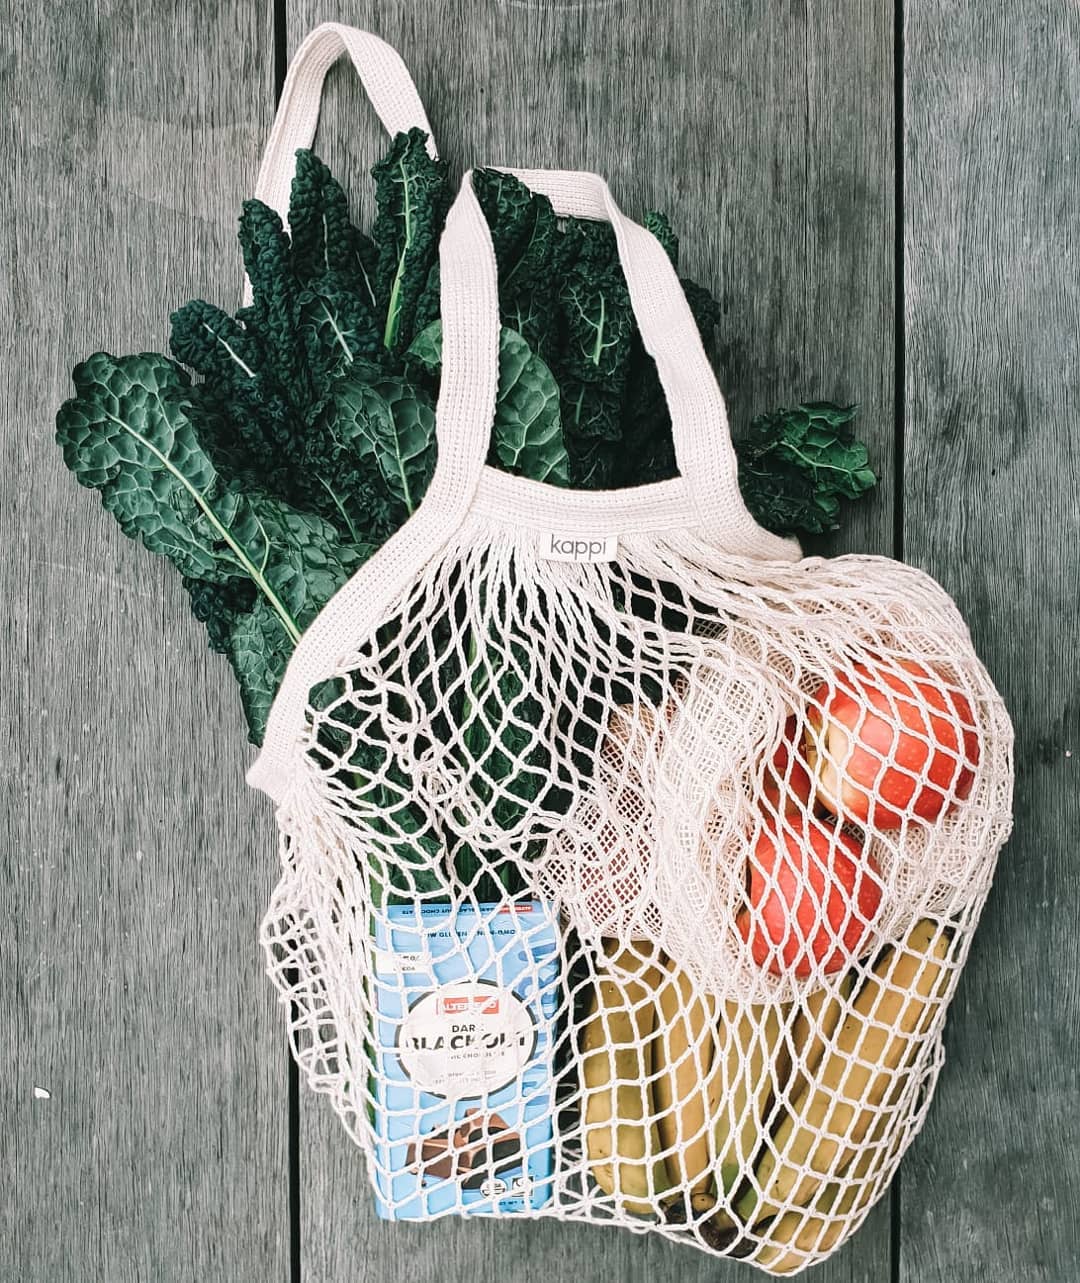 Eco-friendly produce bag. Photo by Instagram user @kappi.life